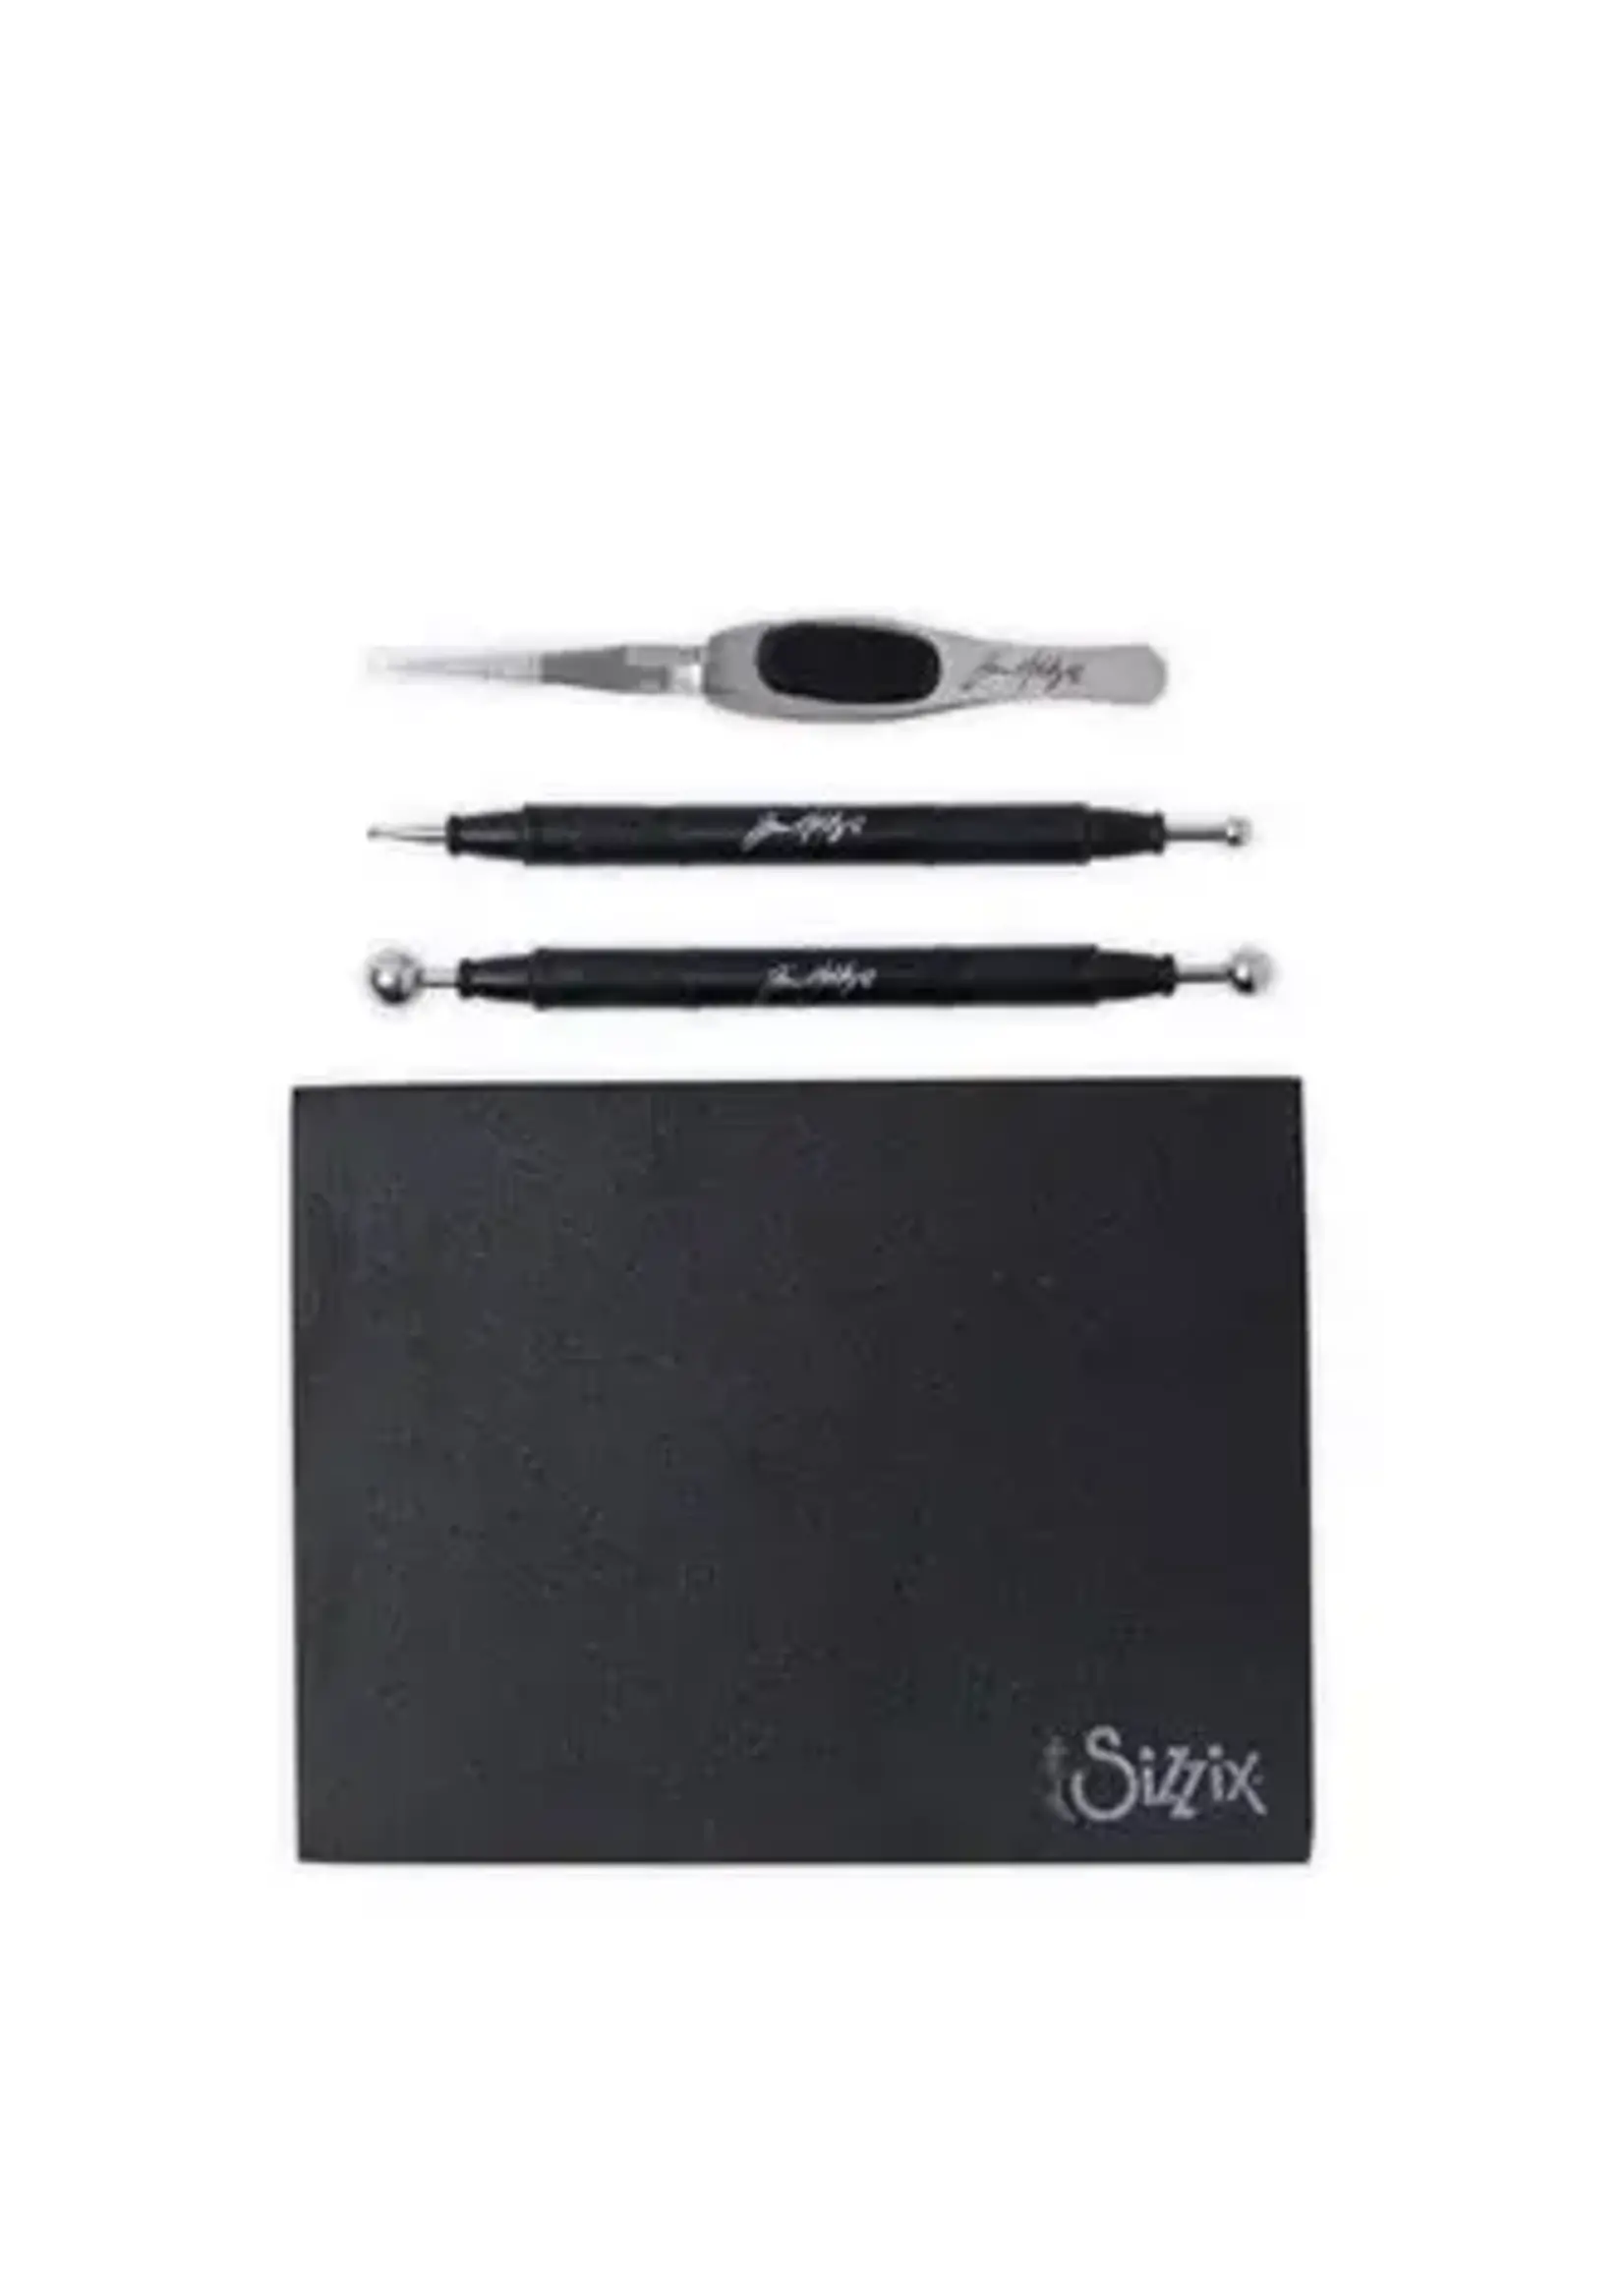 Sizzix Shaping Kit - Black by Tim Holtz (665304)